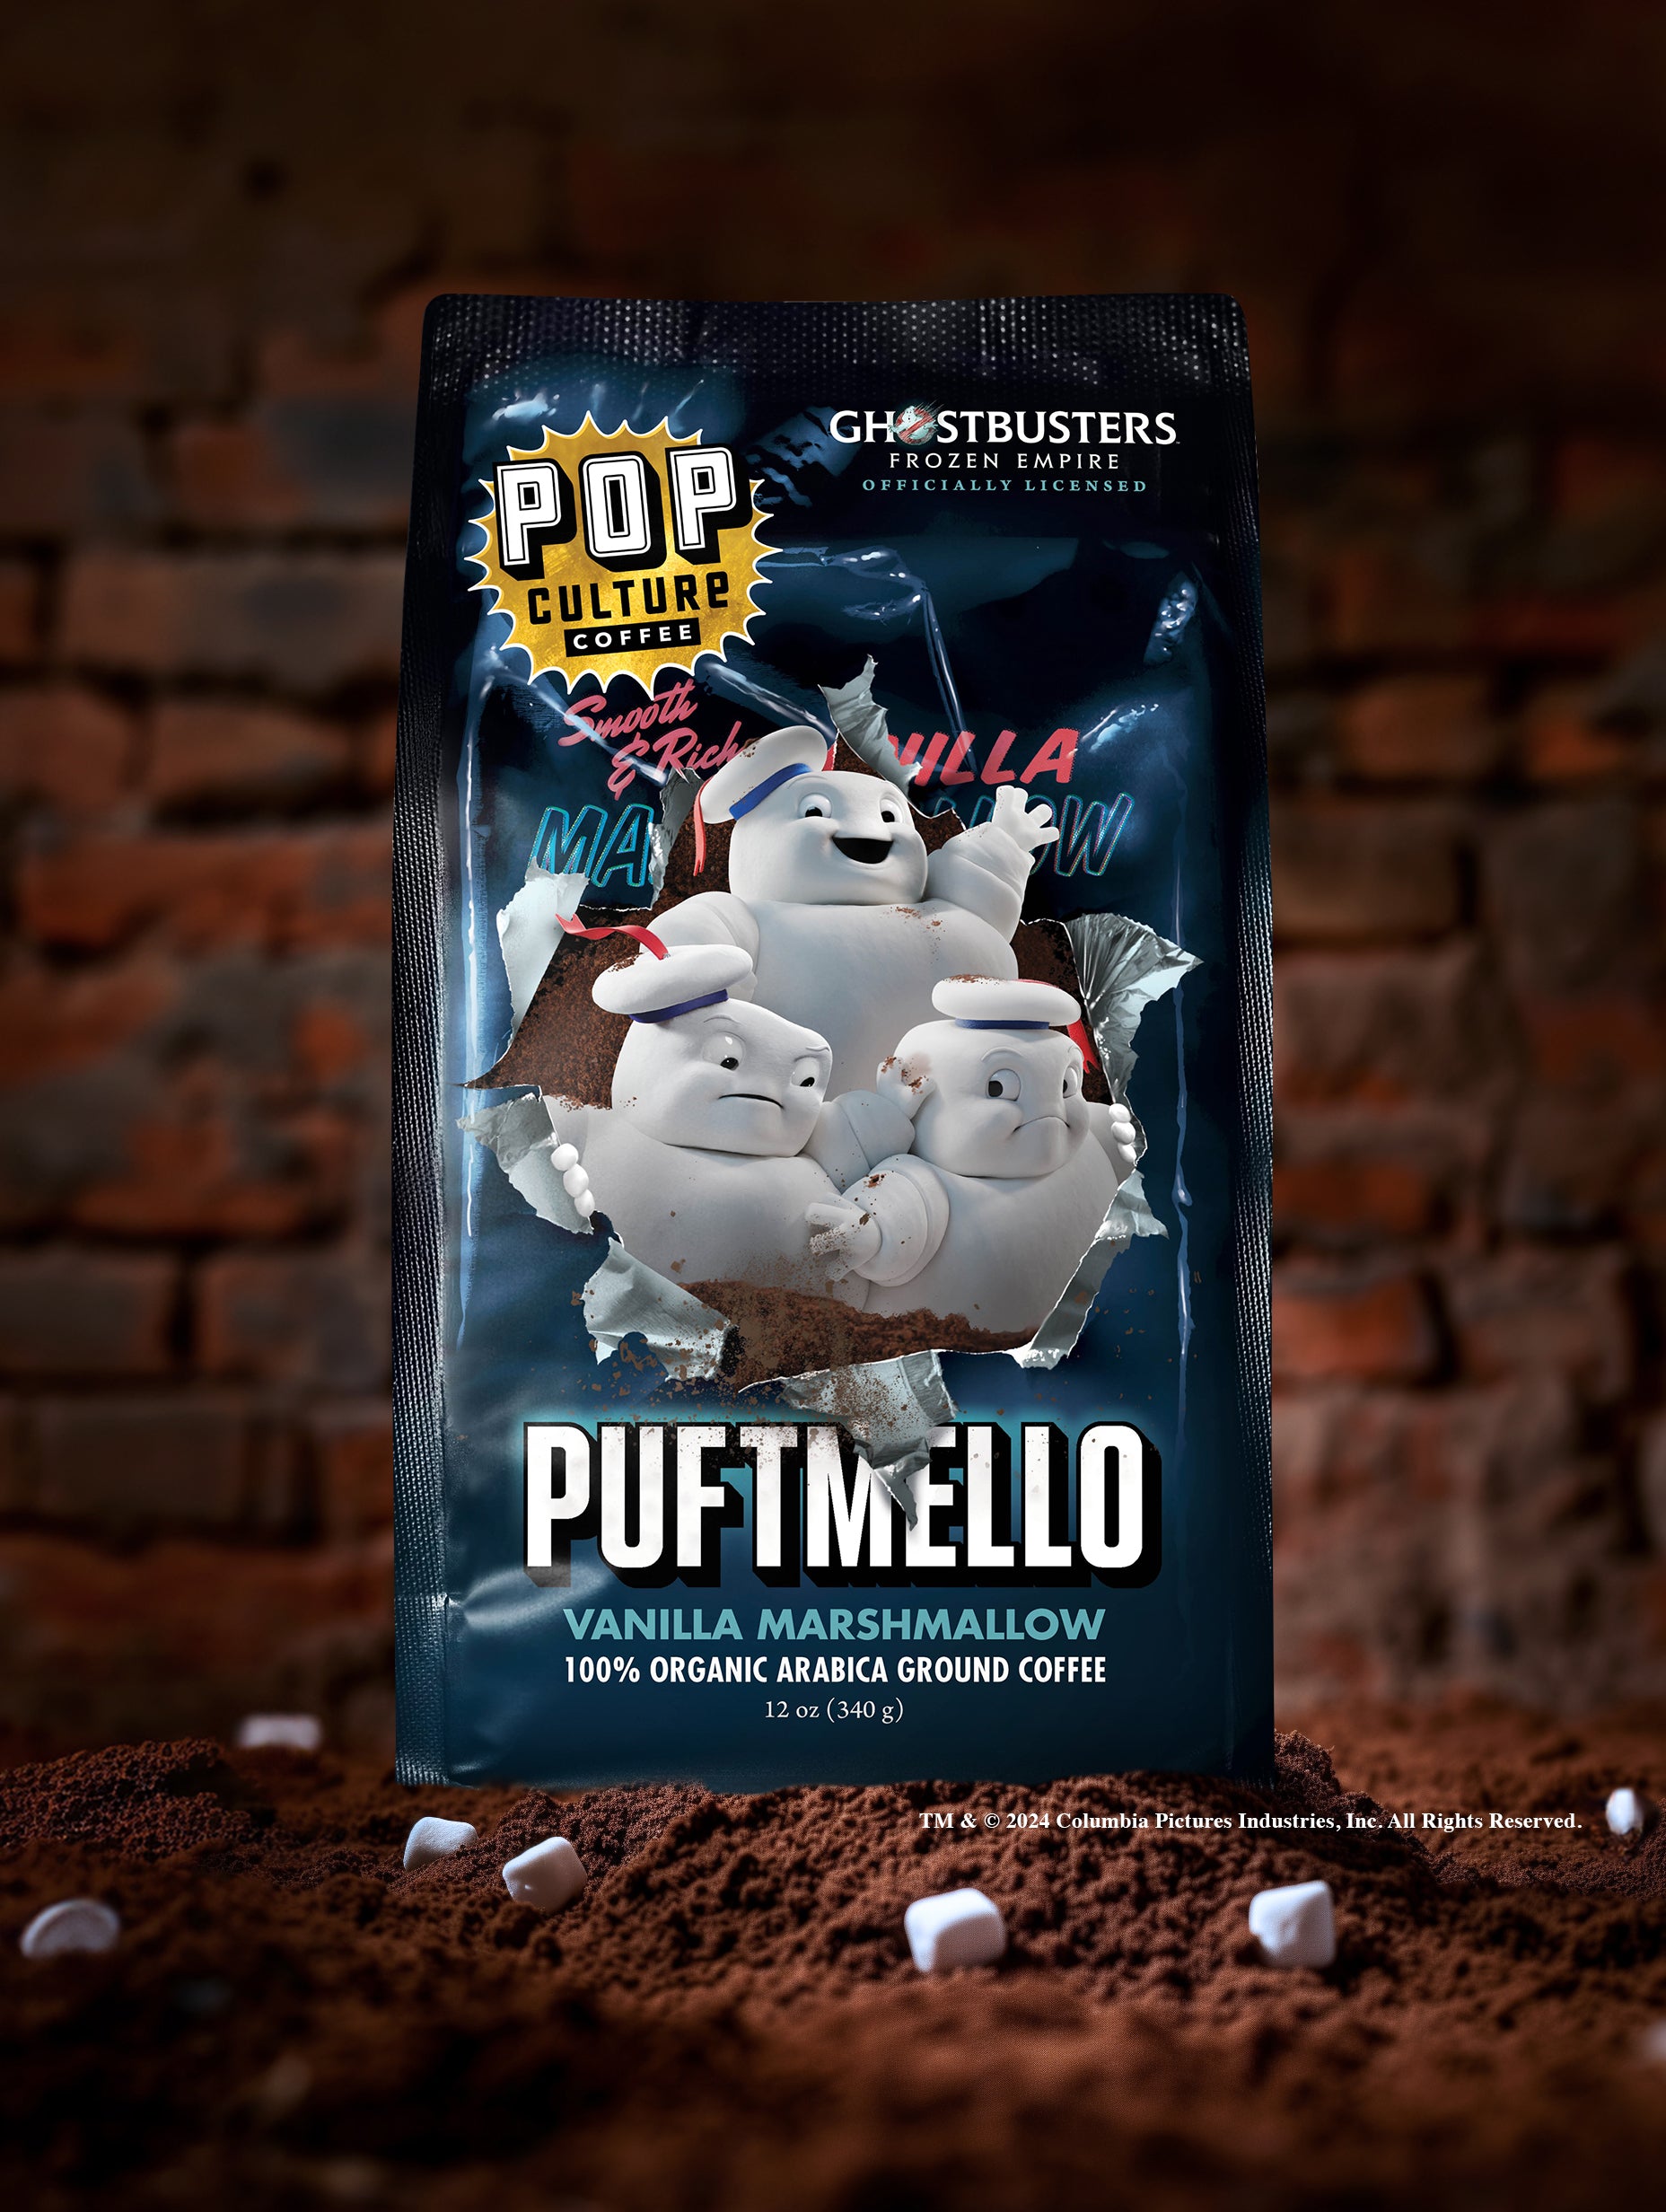 Ghostbusters Frozen Empire Puftmello Coffee Featuring Mini Pufts